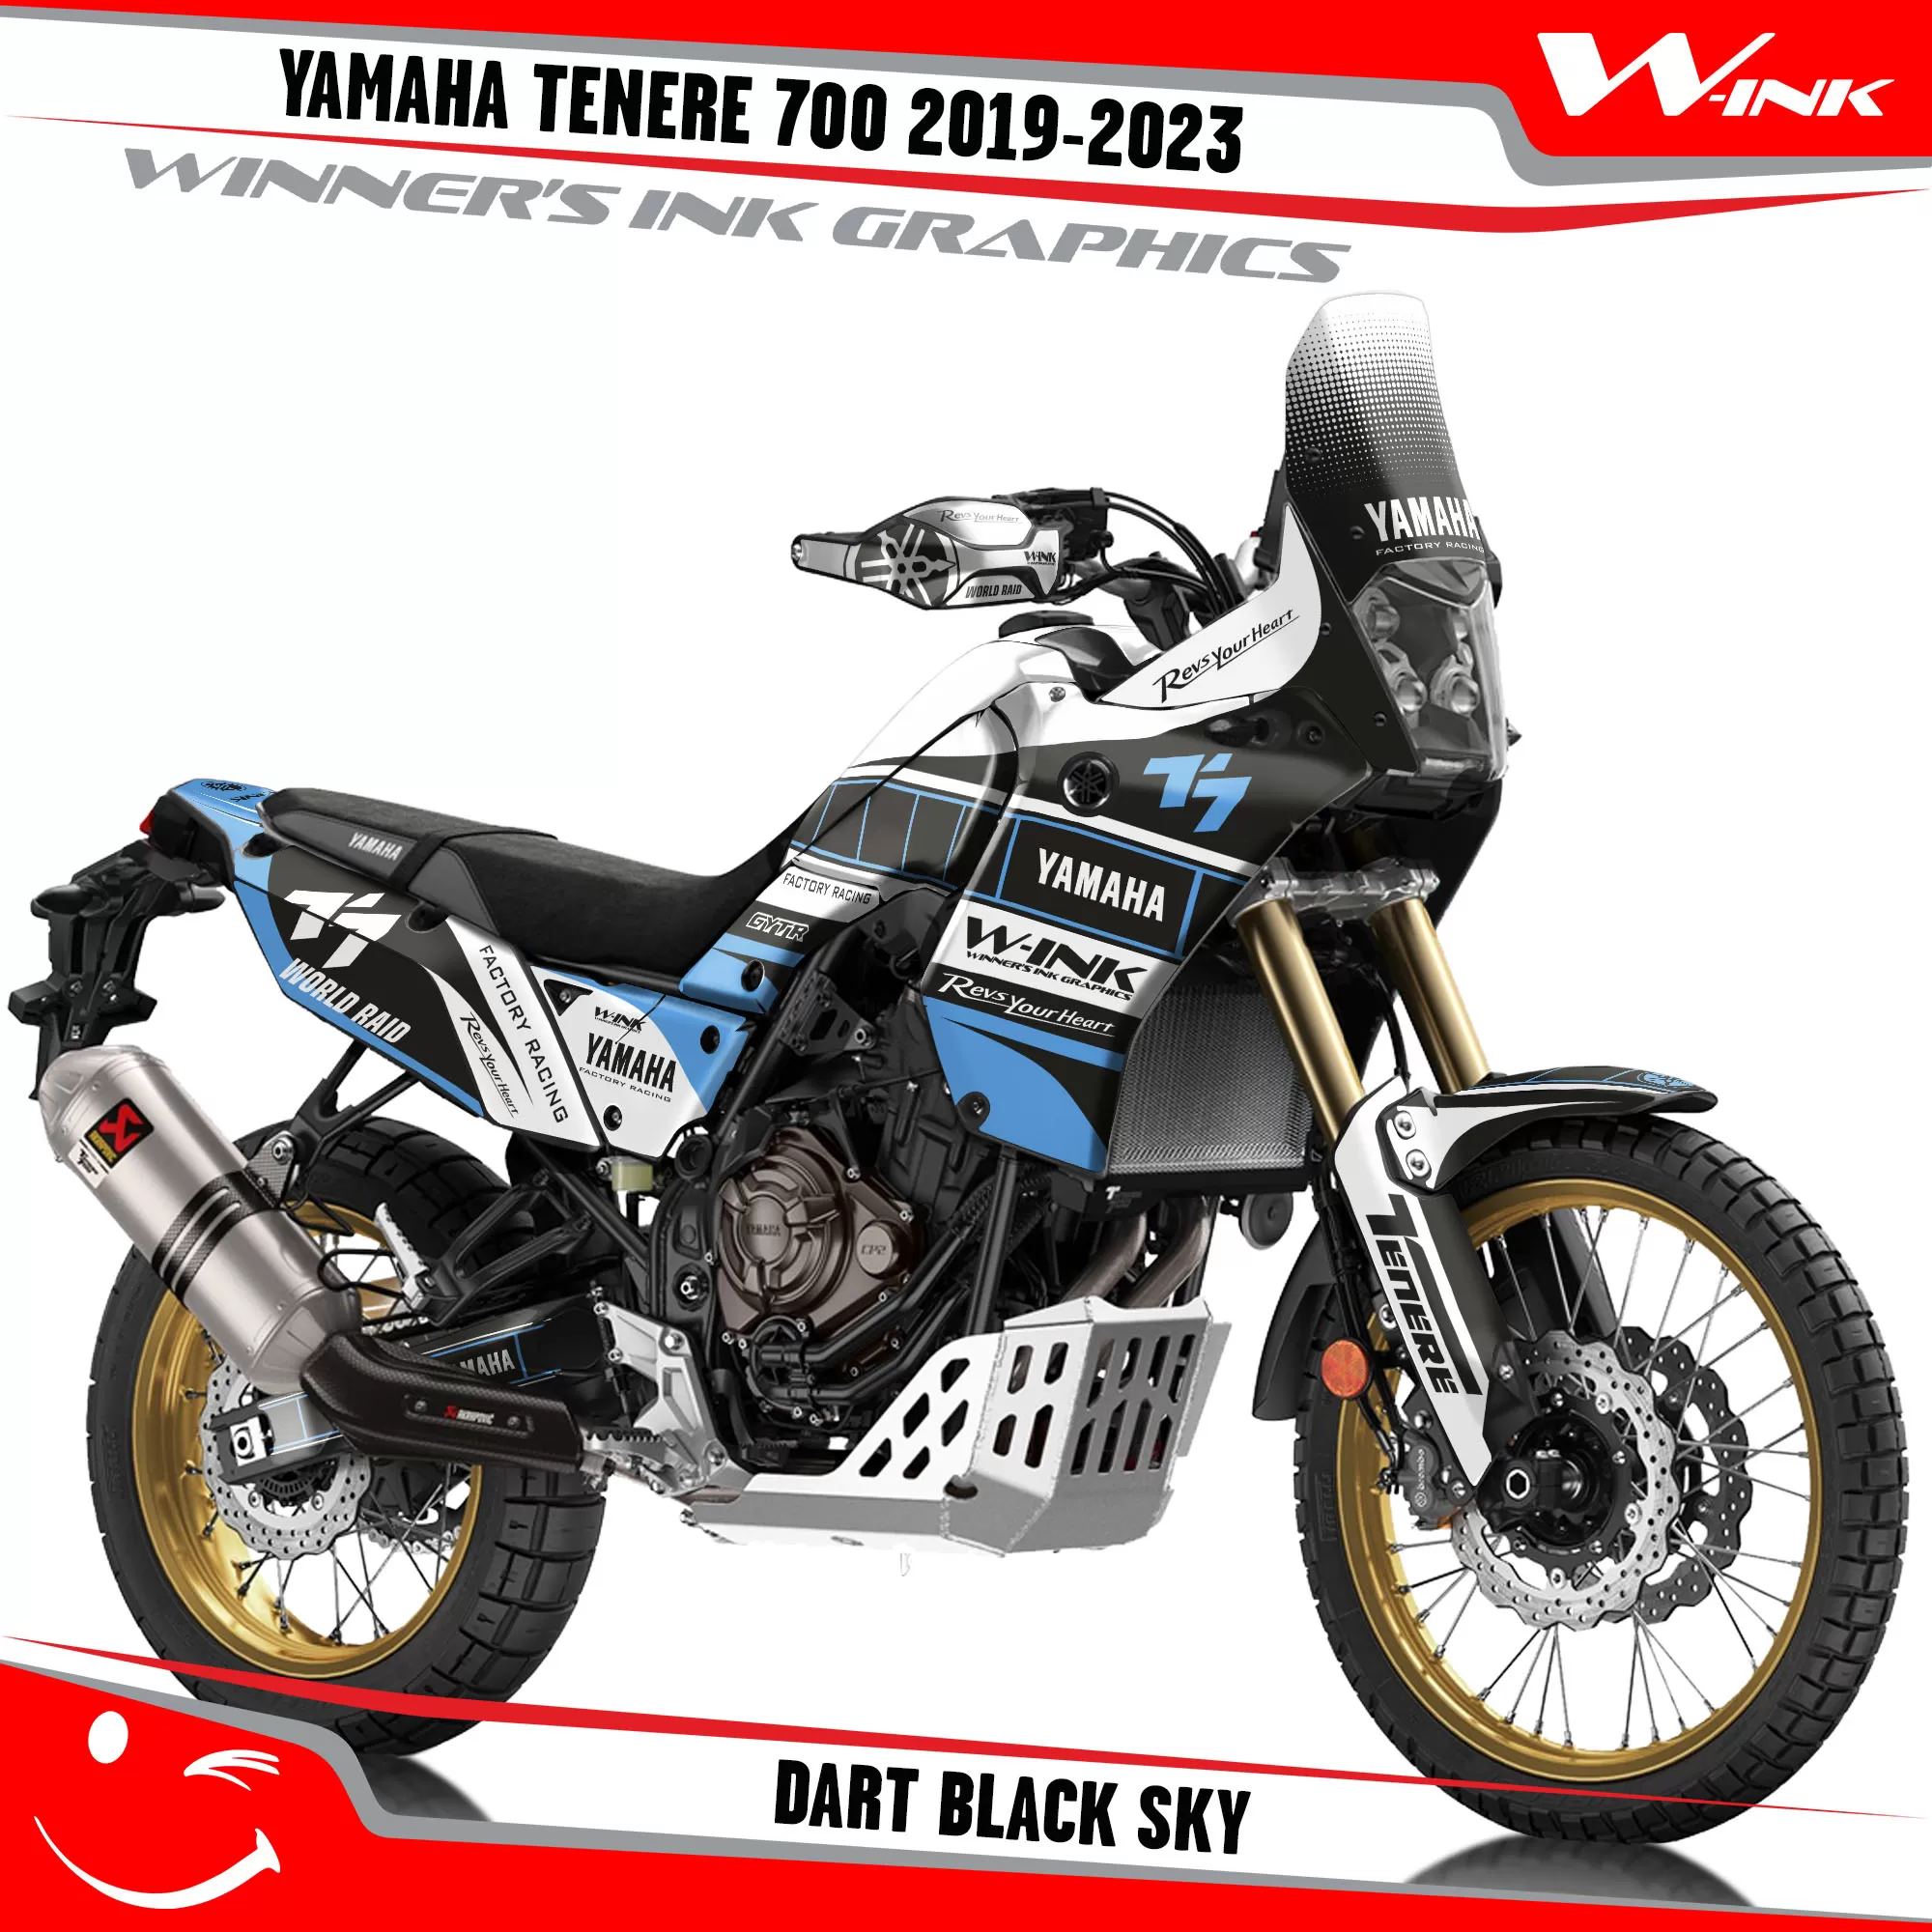 Yamaha-Tenere-700-2019-2020-2021-2022-2023-graphics-kit-and-decals-with-desing-Dart-Black-Sky